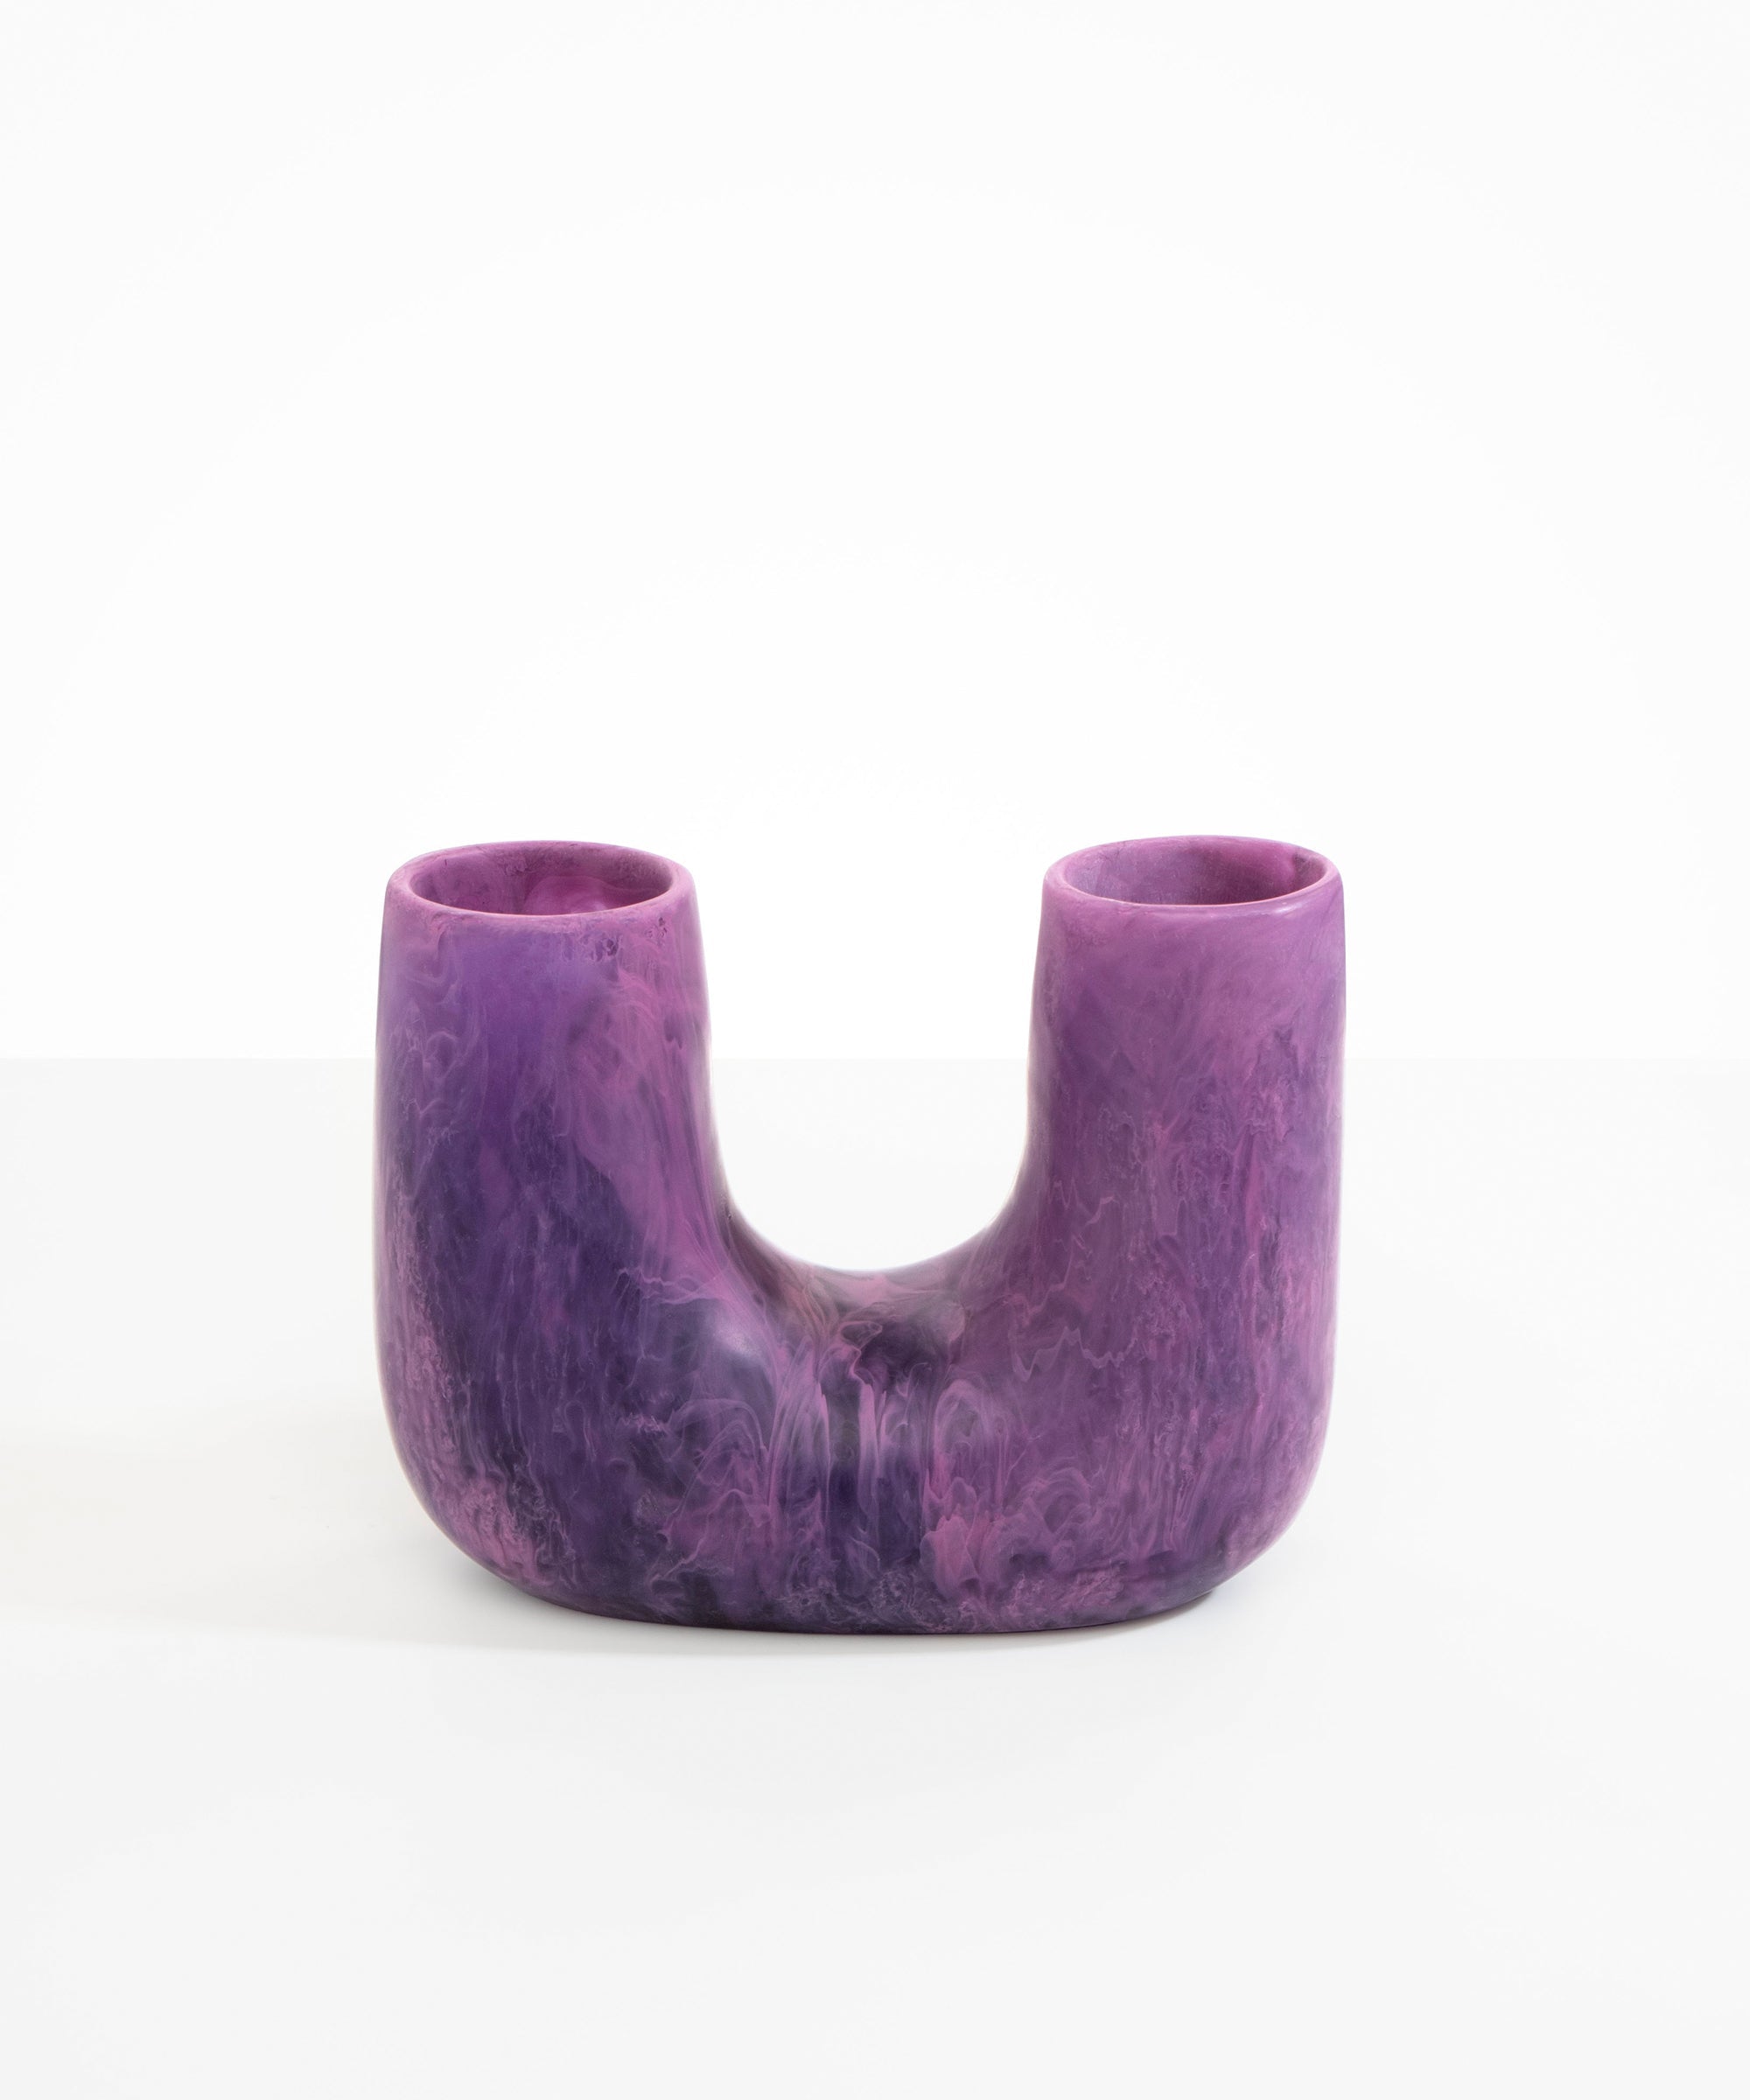 Dinosaur Designs Medium Branch Vase Vases in Grape color resin